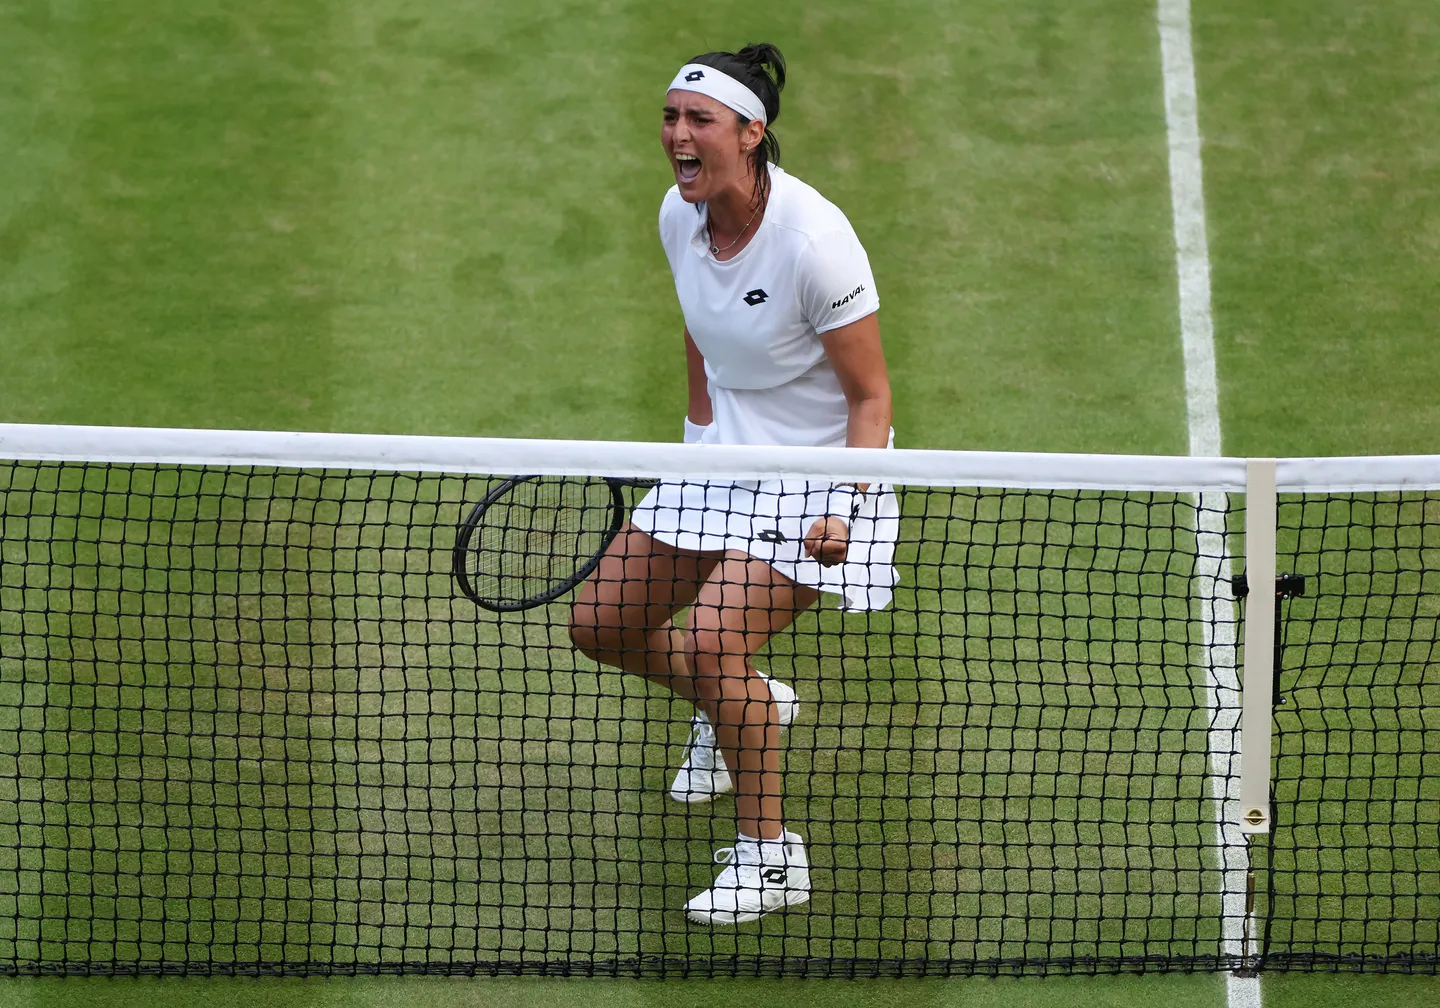 Wimbledon Women’s Final – Jabeur vs Rybakina, July 9